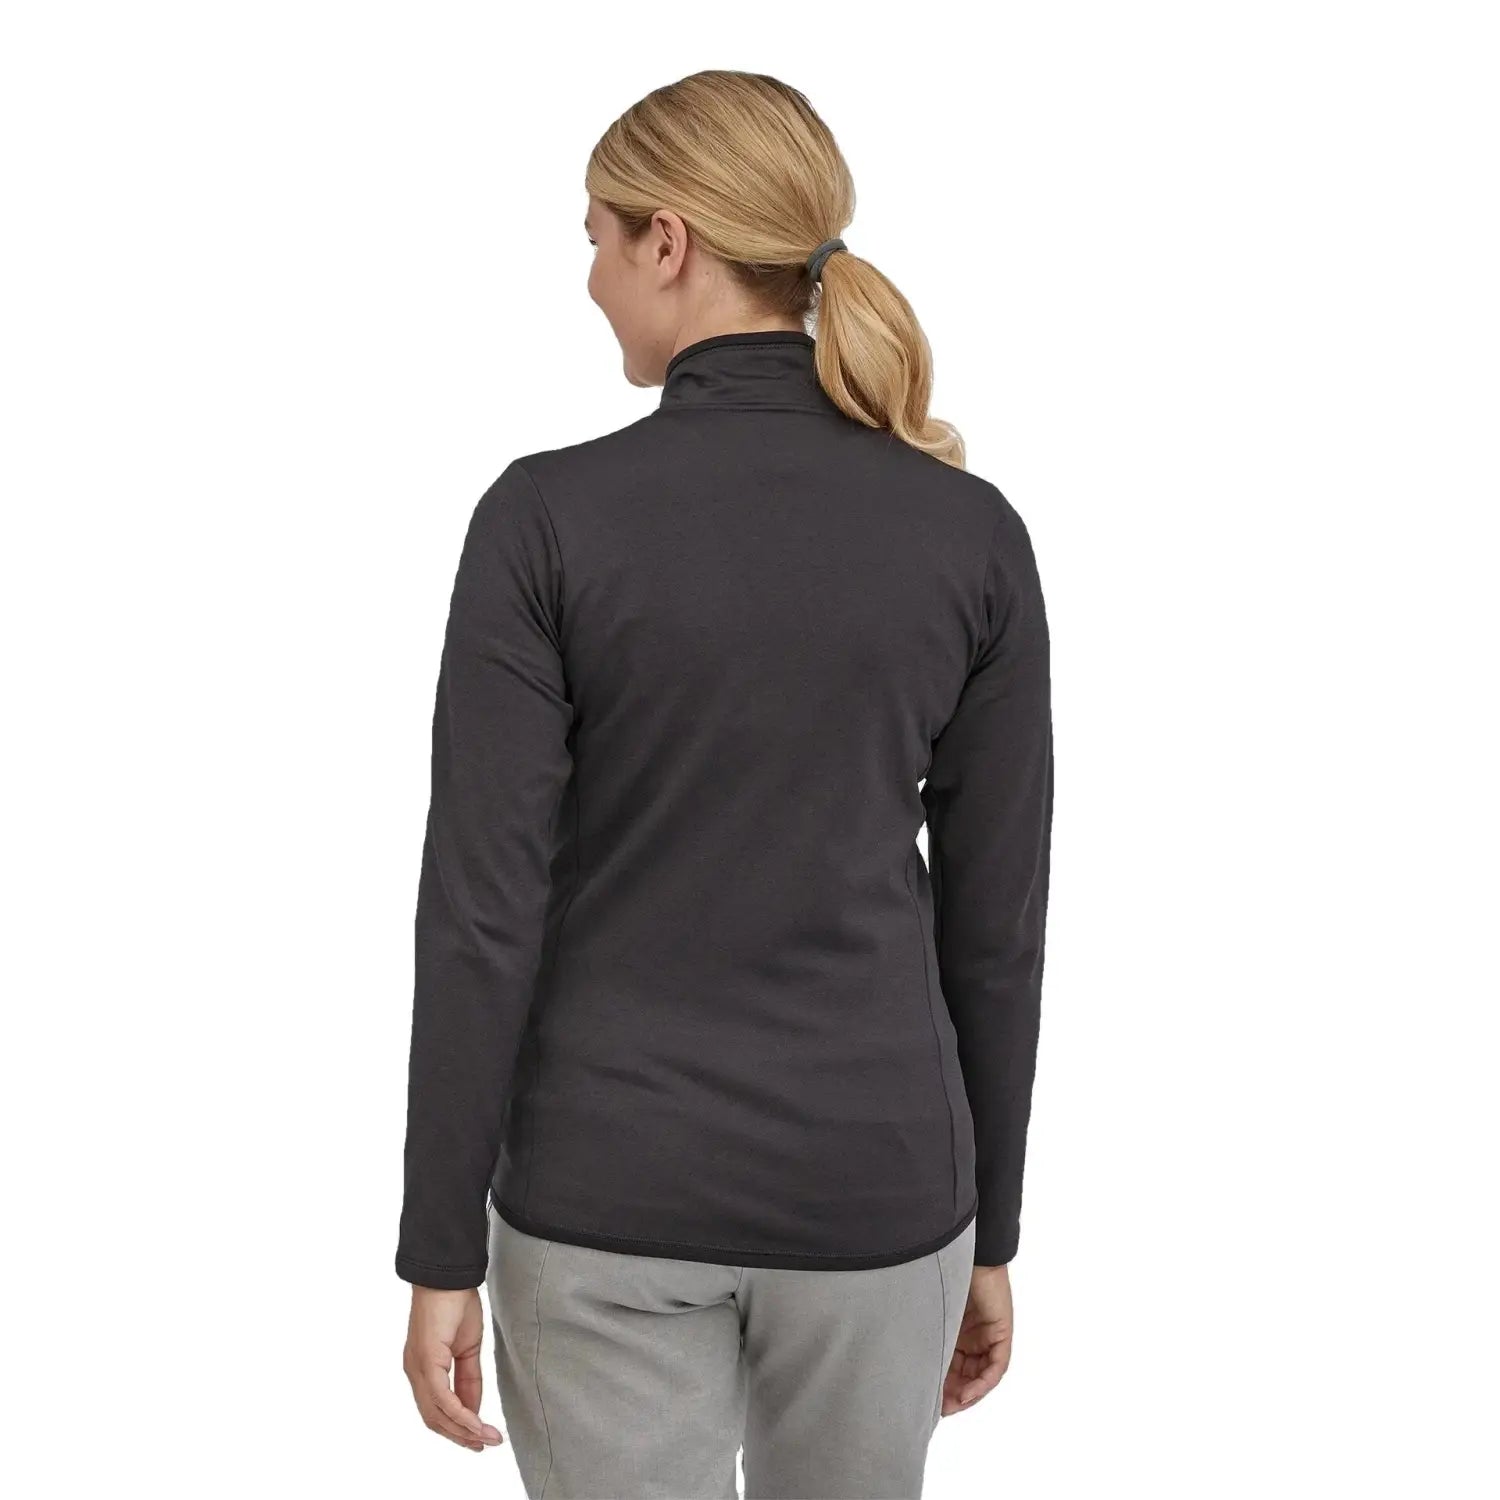 Patagonia W's R1® Daily Jacket, Ink Black-Black X-Dye, back view on model